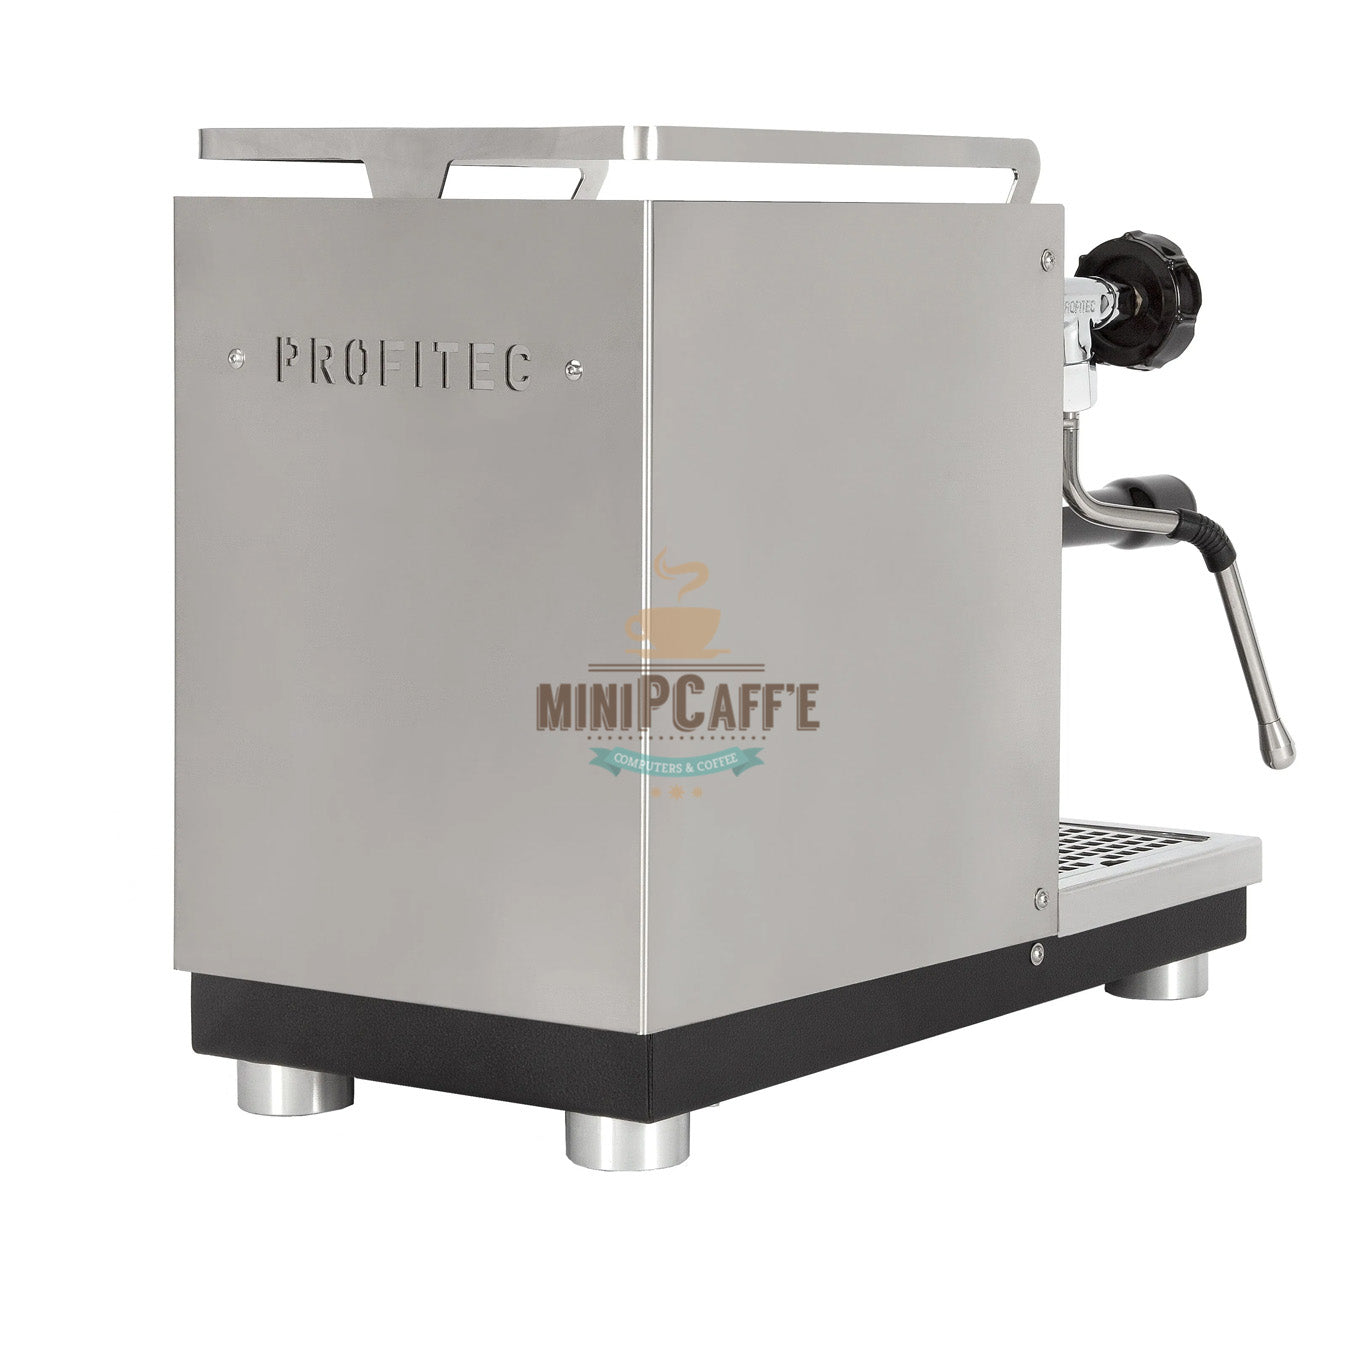 Profitec Pro 400 Espresso Machine at Eureka Manuale Grinder